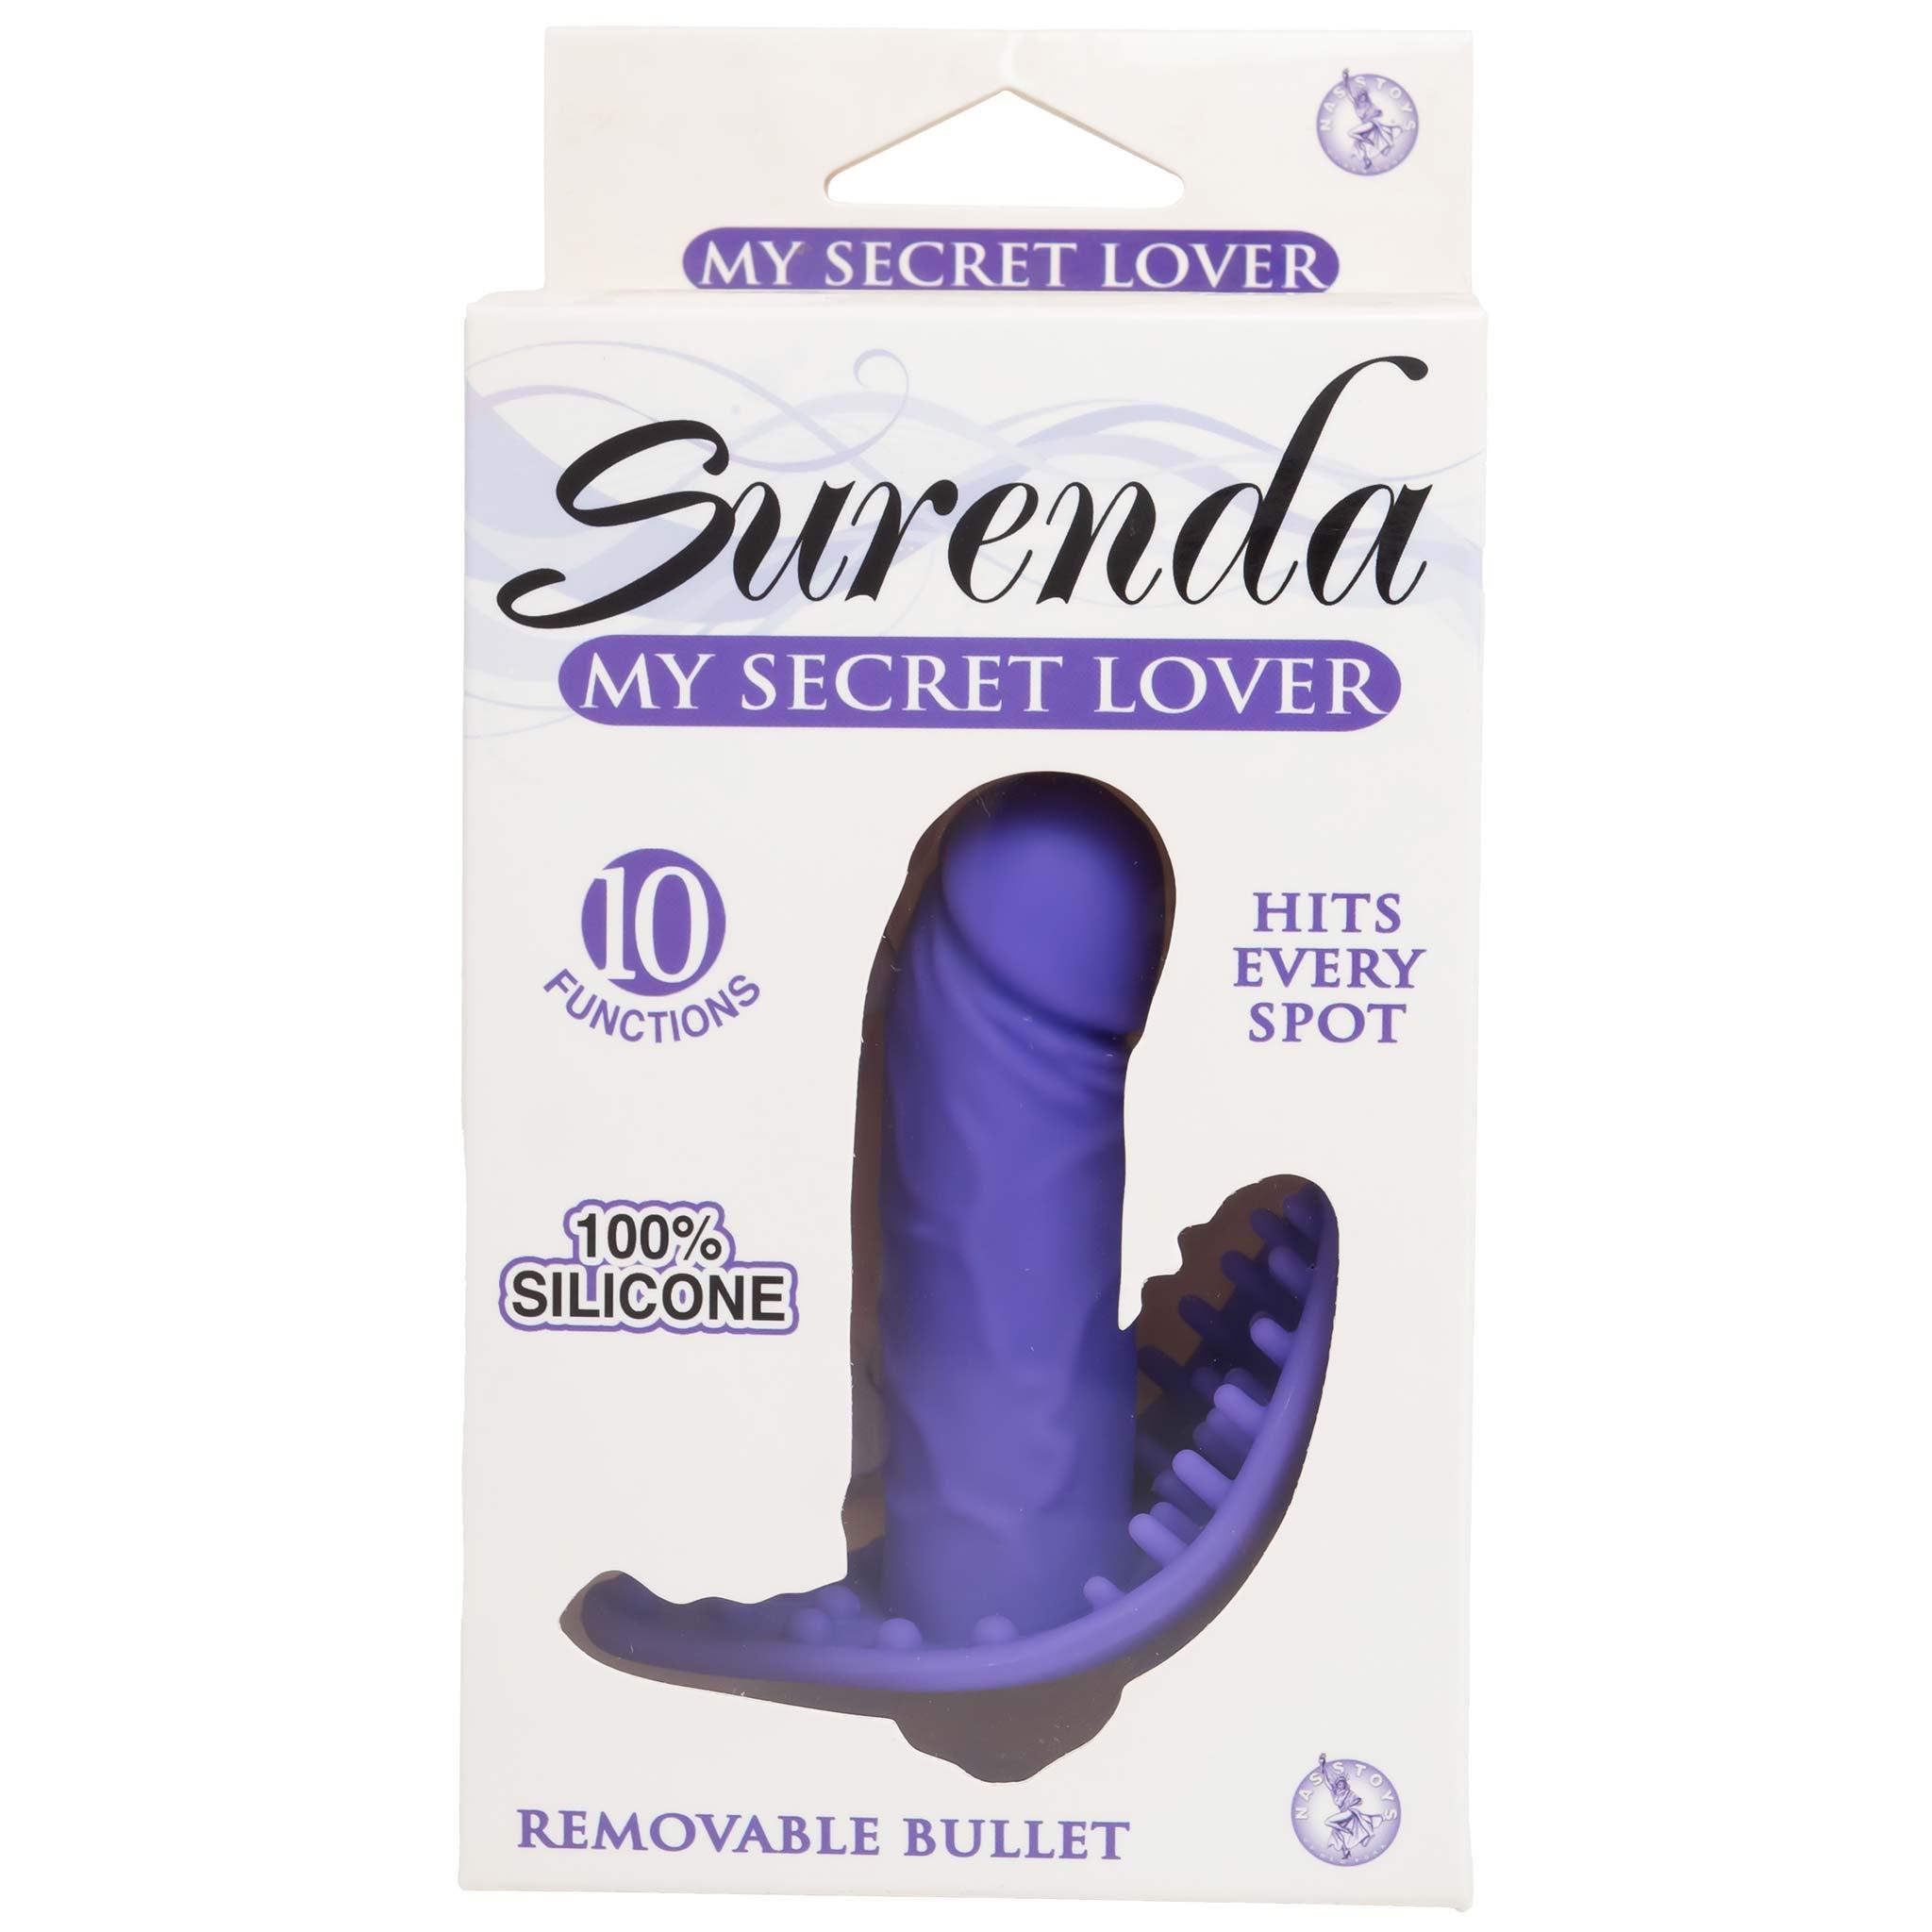 Surenda My Secret Lover Mini Vibrator, Purple